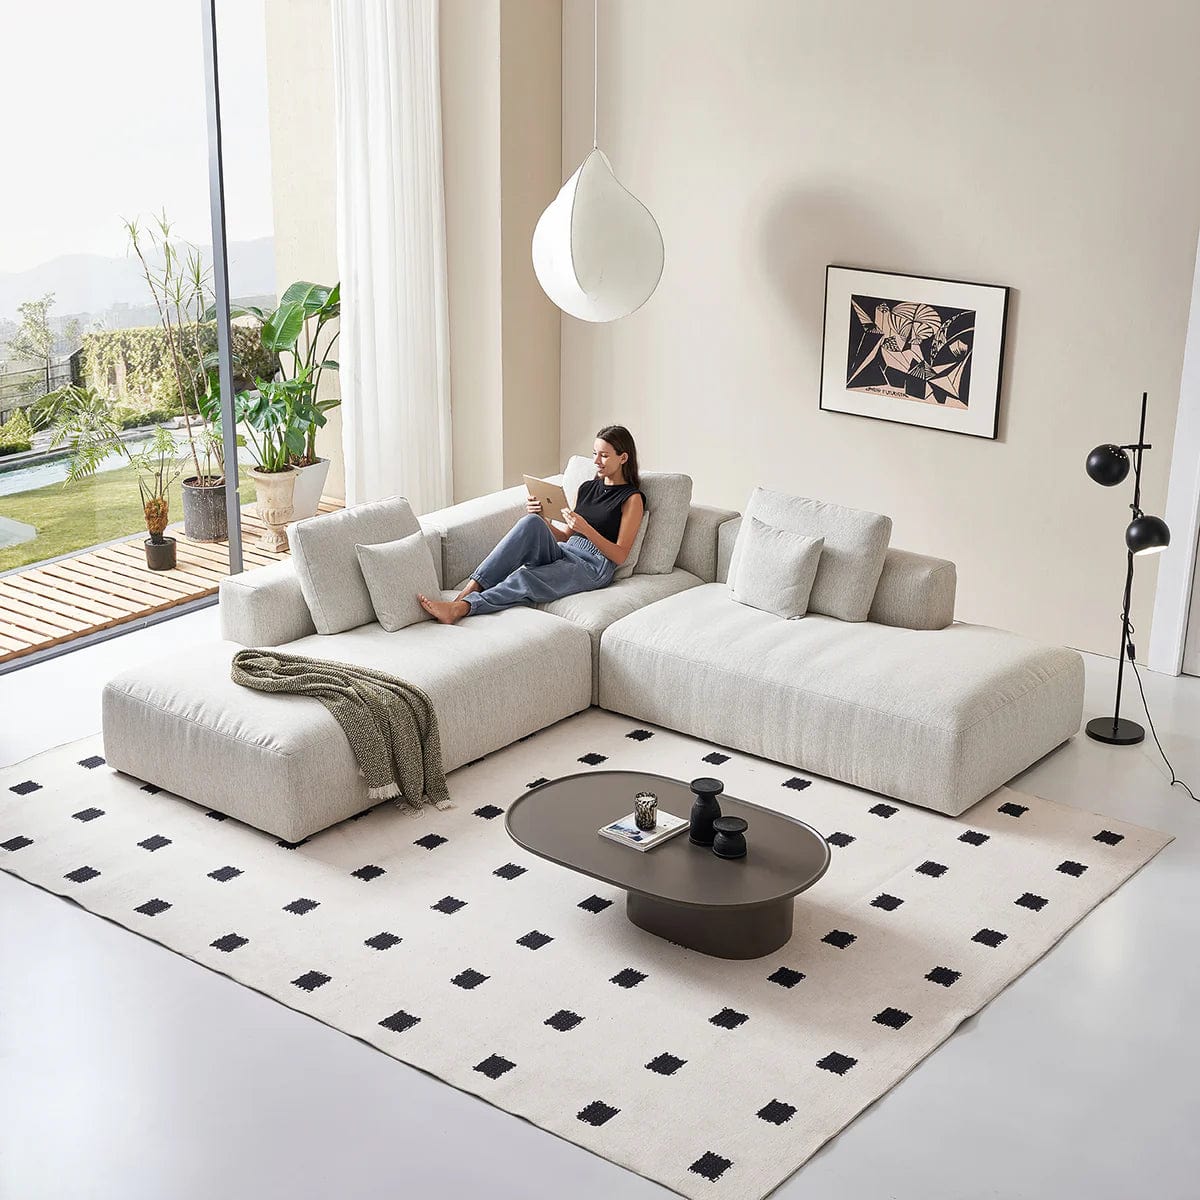 Home Atelier Nathan Designer Sectional Sofa